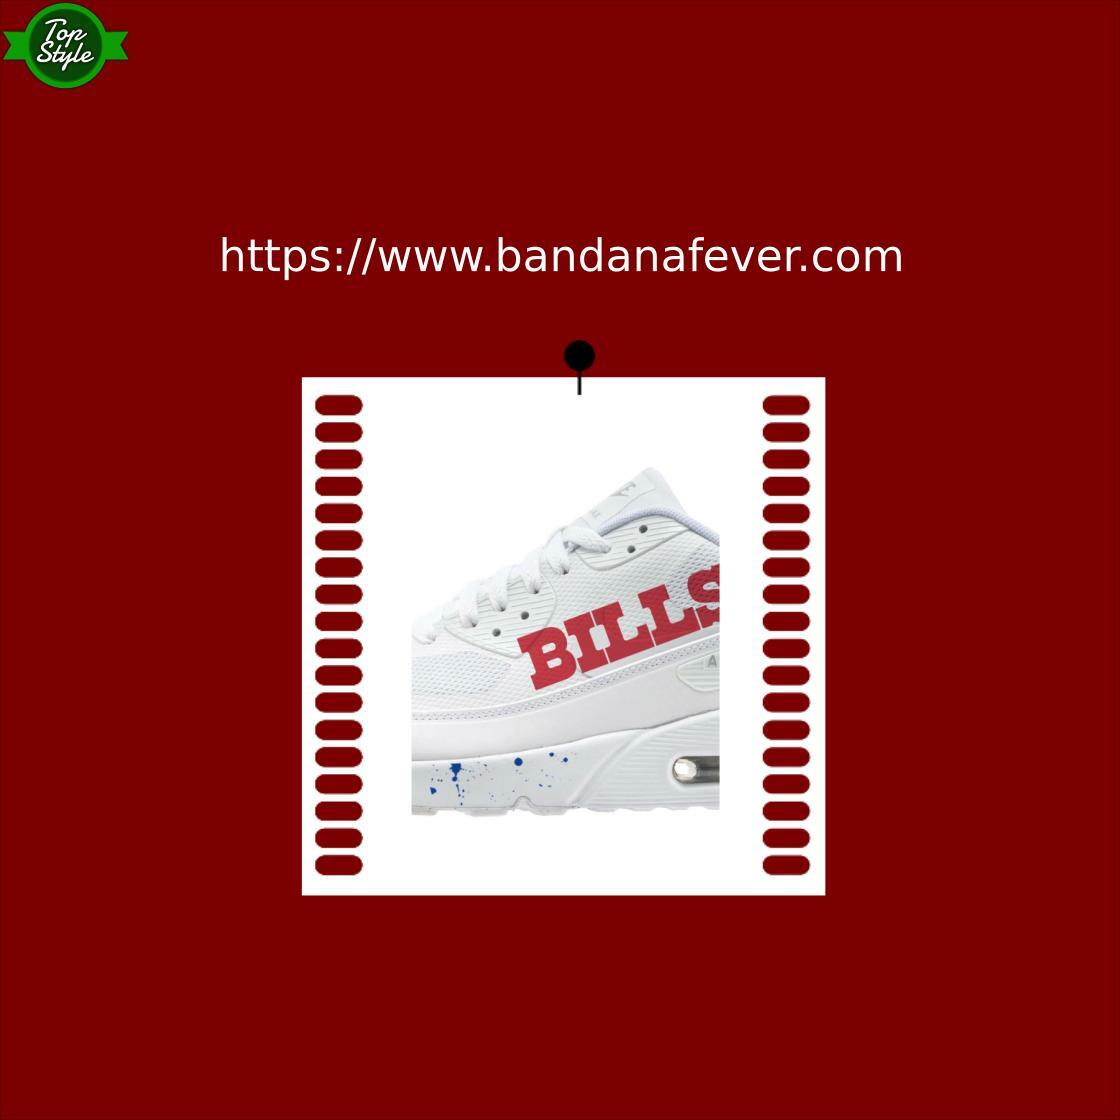 Smart Buys! Buffalo Bills Blue Splat Custom Nike Air Max Shoes White starting from $297.99 at bandanafever.com/product/buffal… See more. 🤓 #supremelv #sneakerdesign